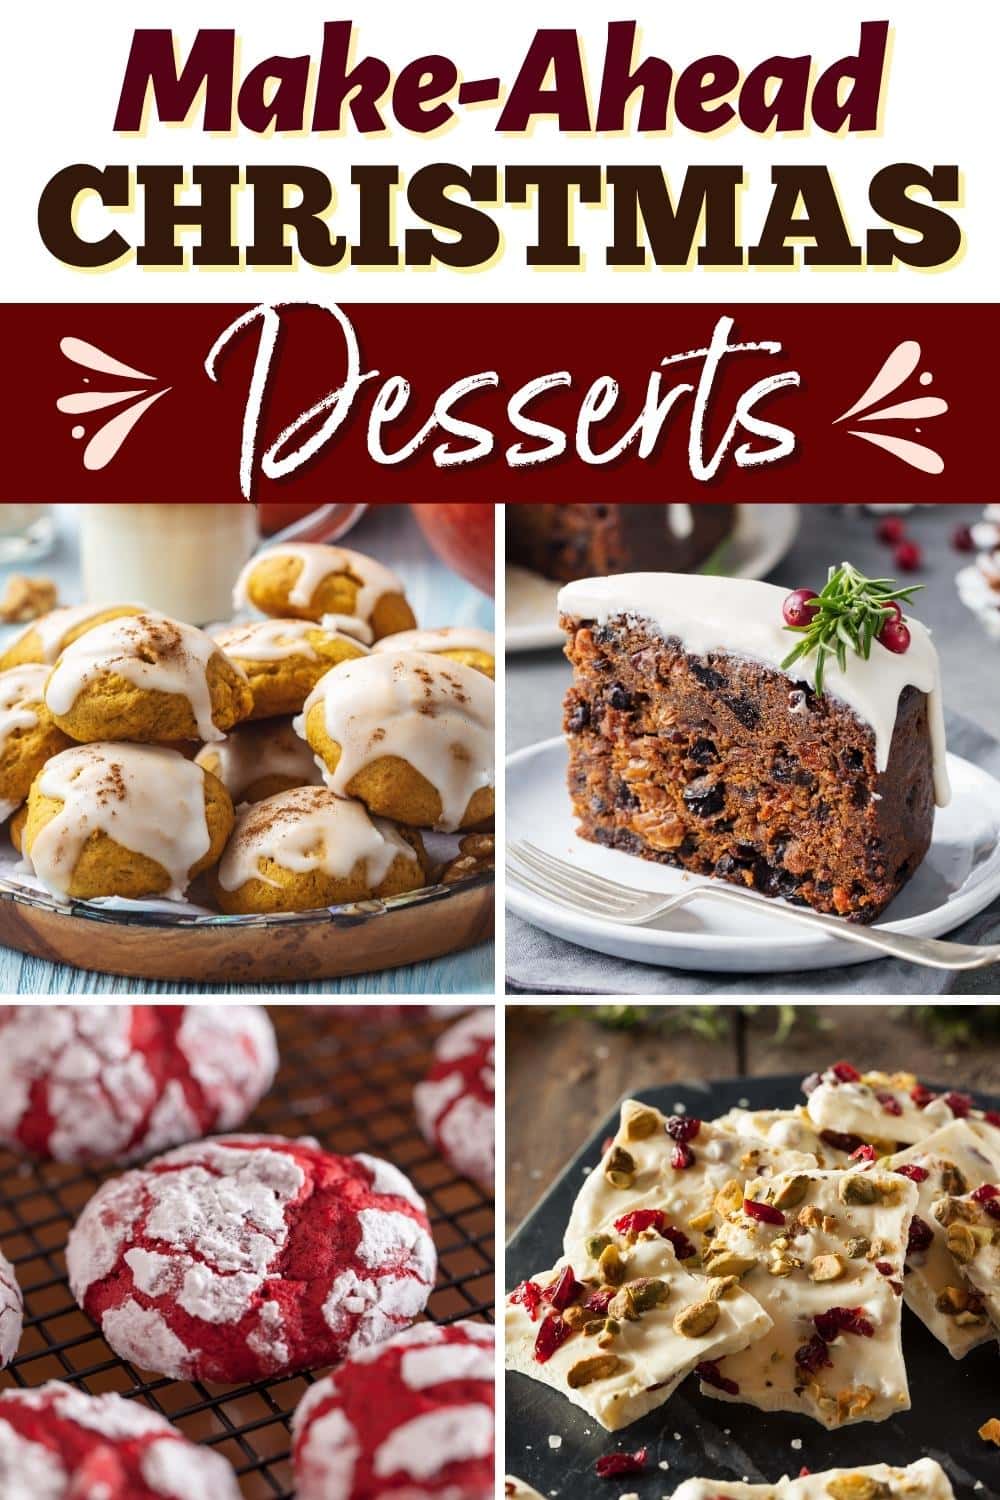 Make-Ahead Christmas Desserts